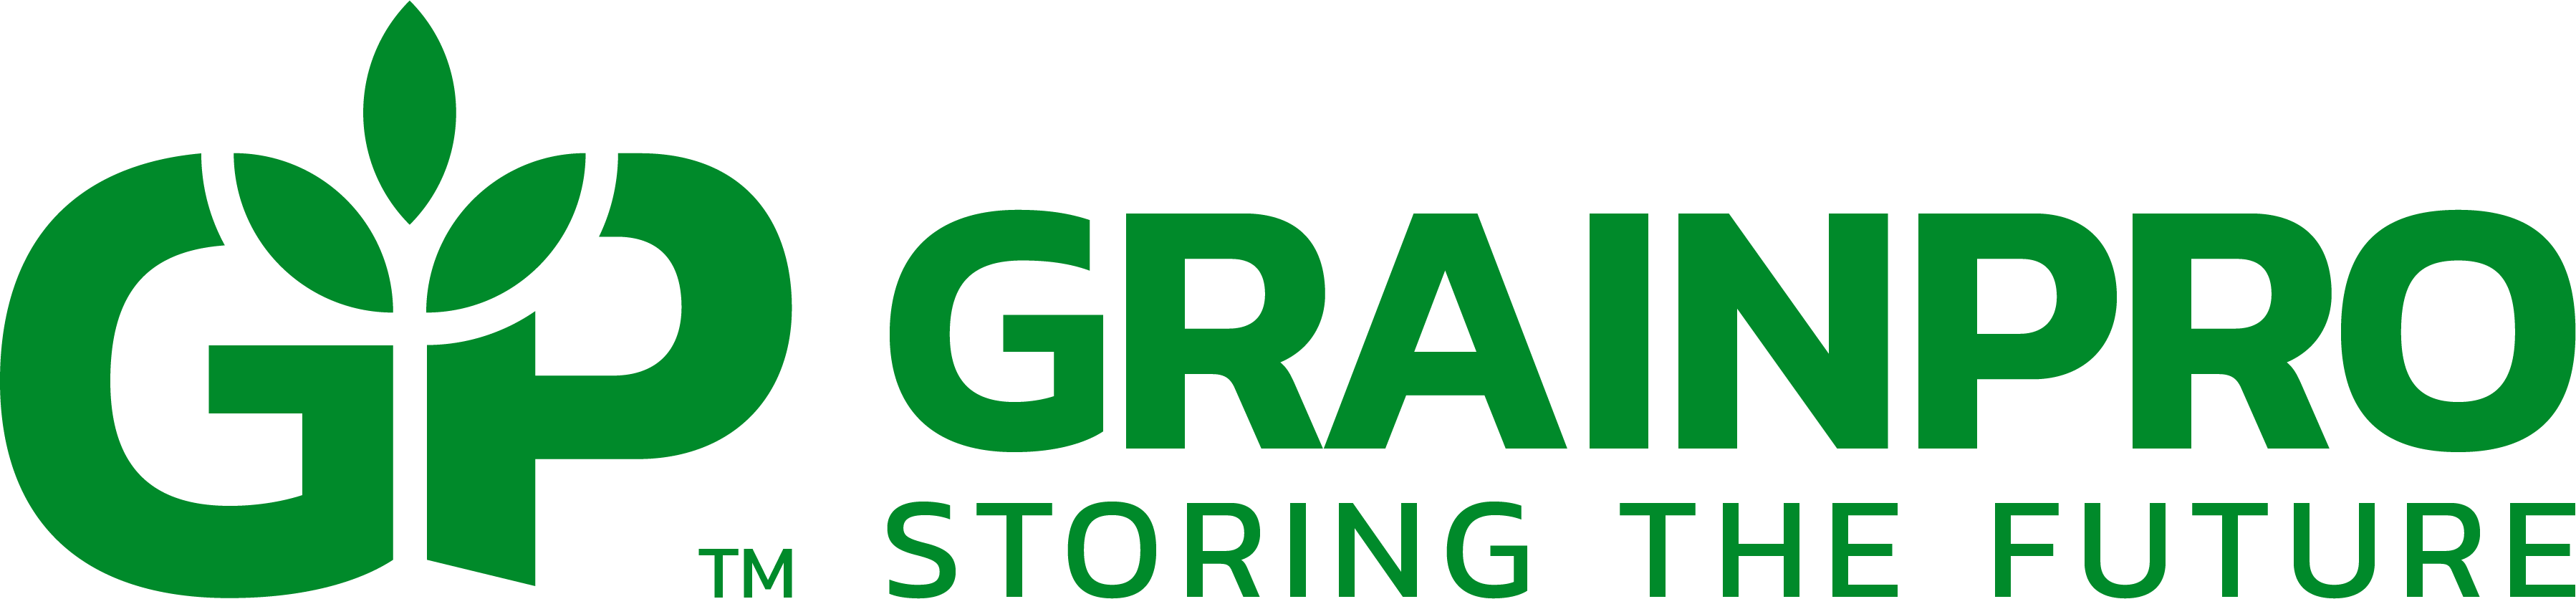 Quite Green Bubble Logo - Post Harvest Handling & Storage Solutions for Grains & Beans